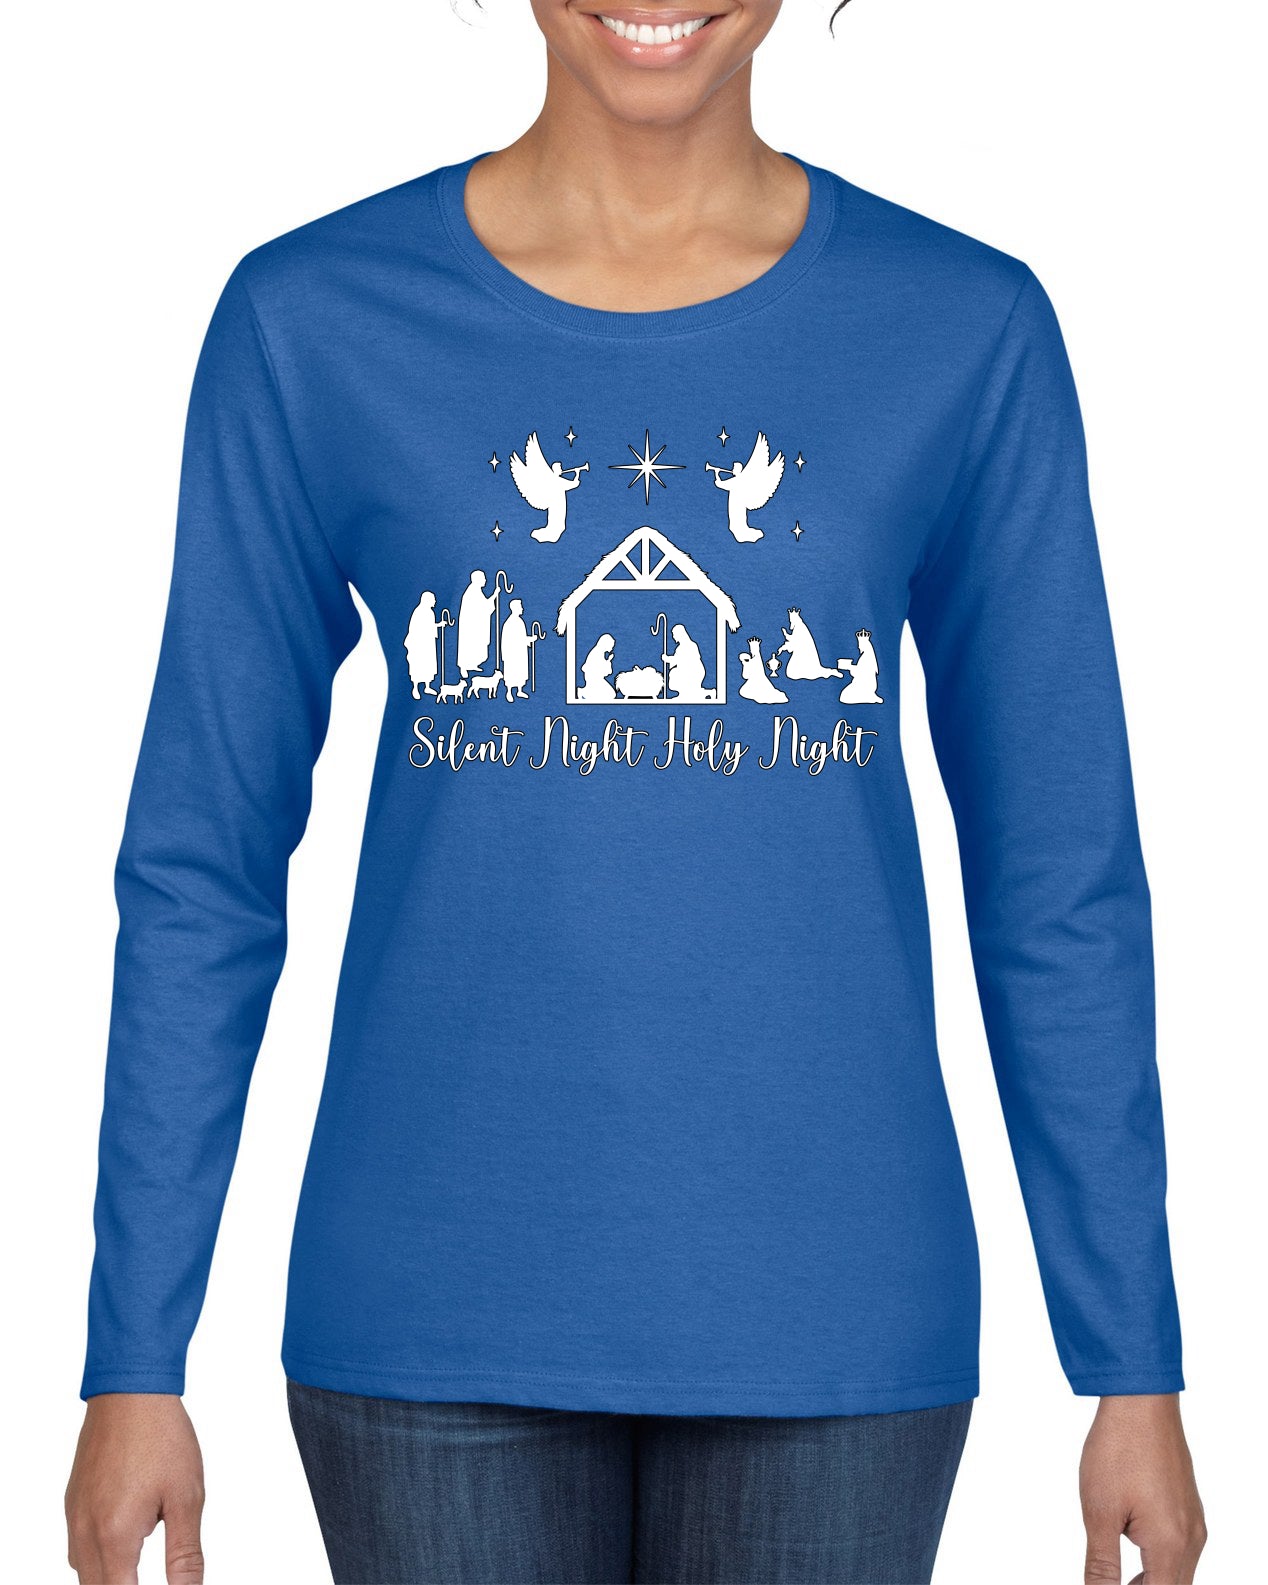 Silent Night Holy Night Religious Jesus Christmas Womens Graphic Long Sleeve T-Shirt